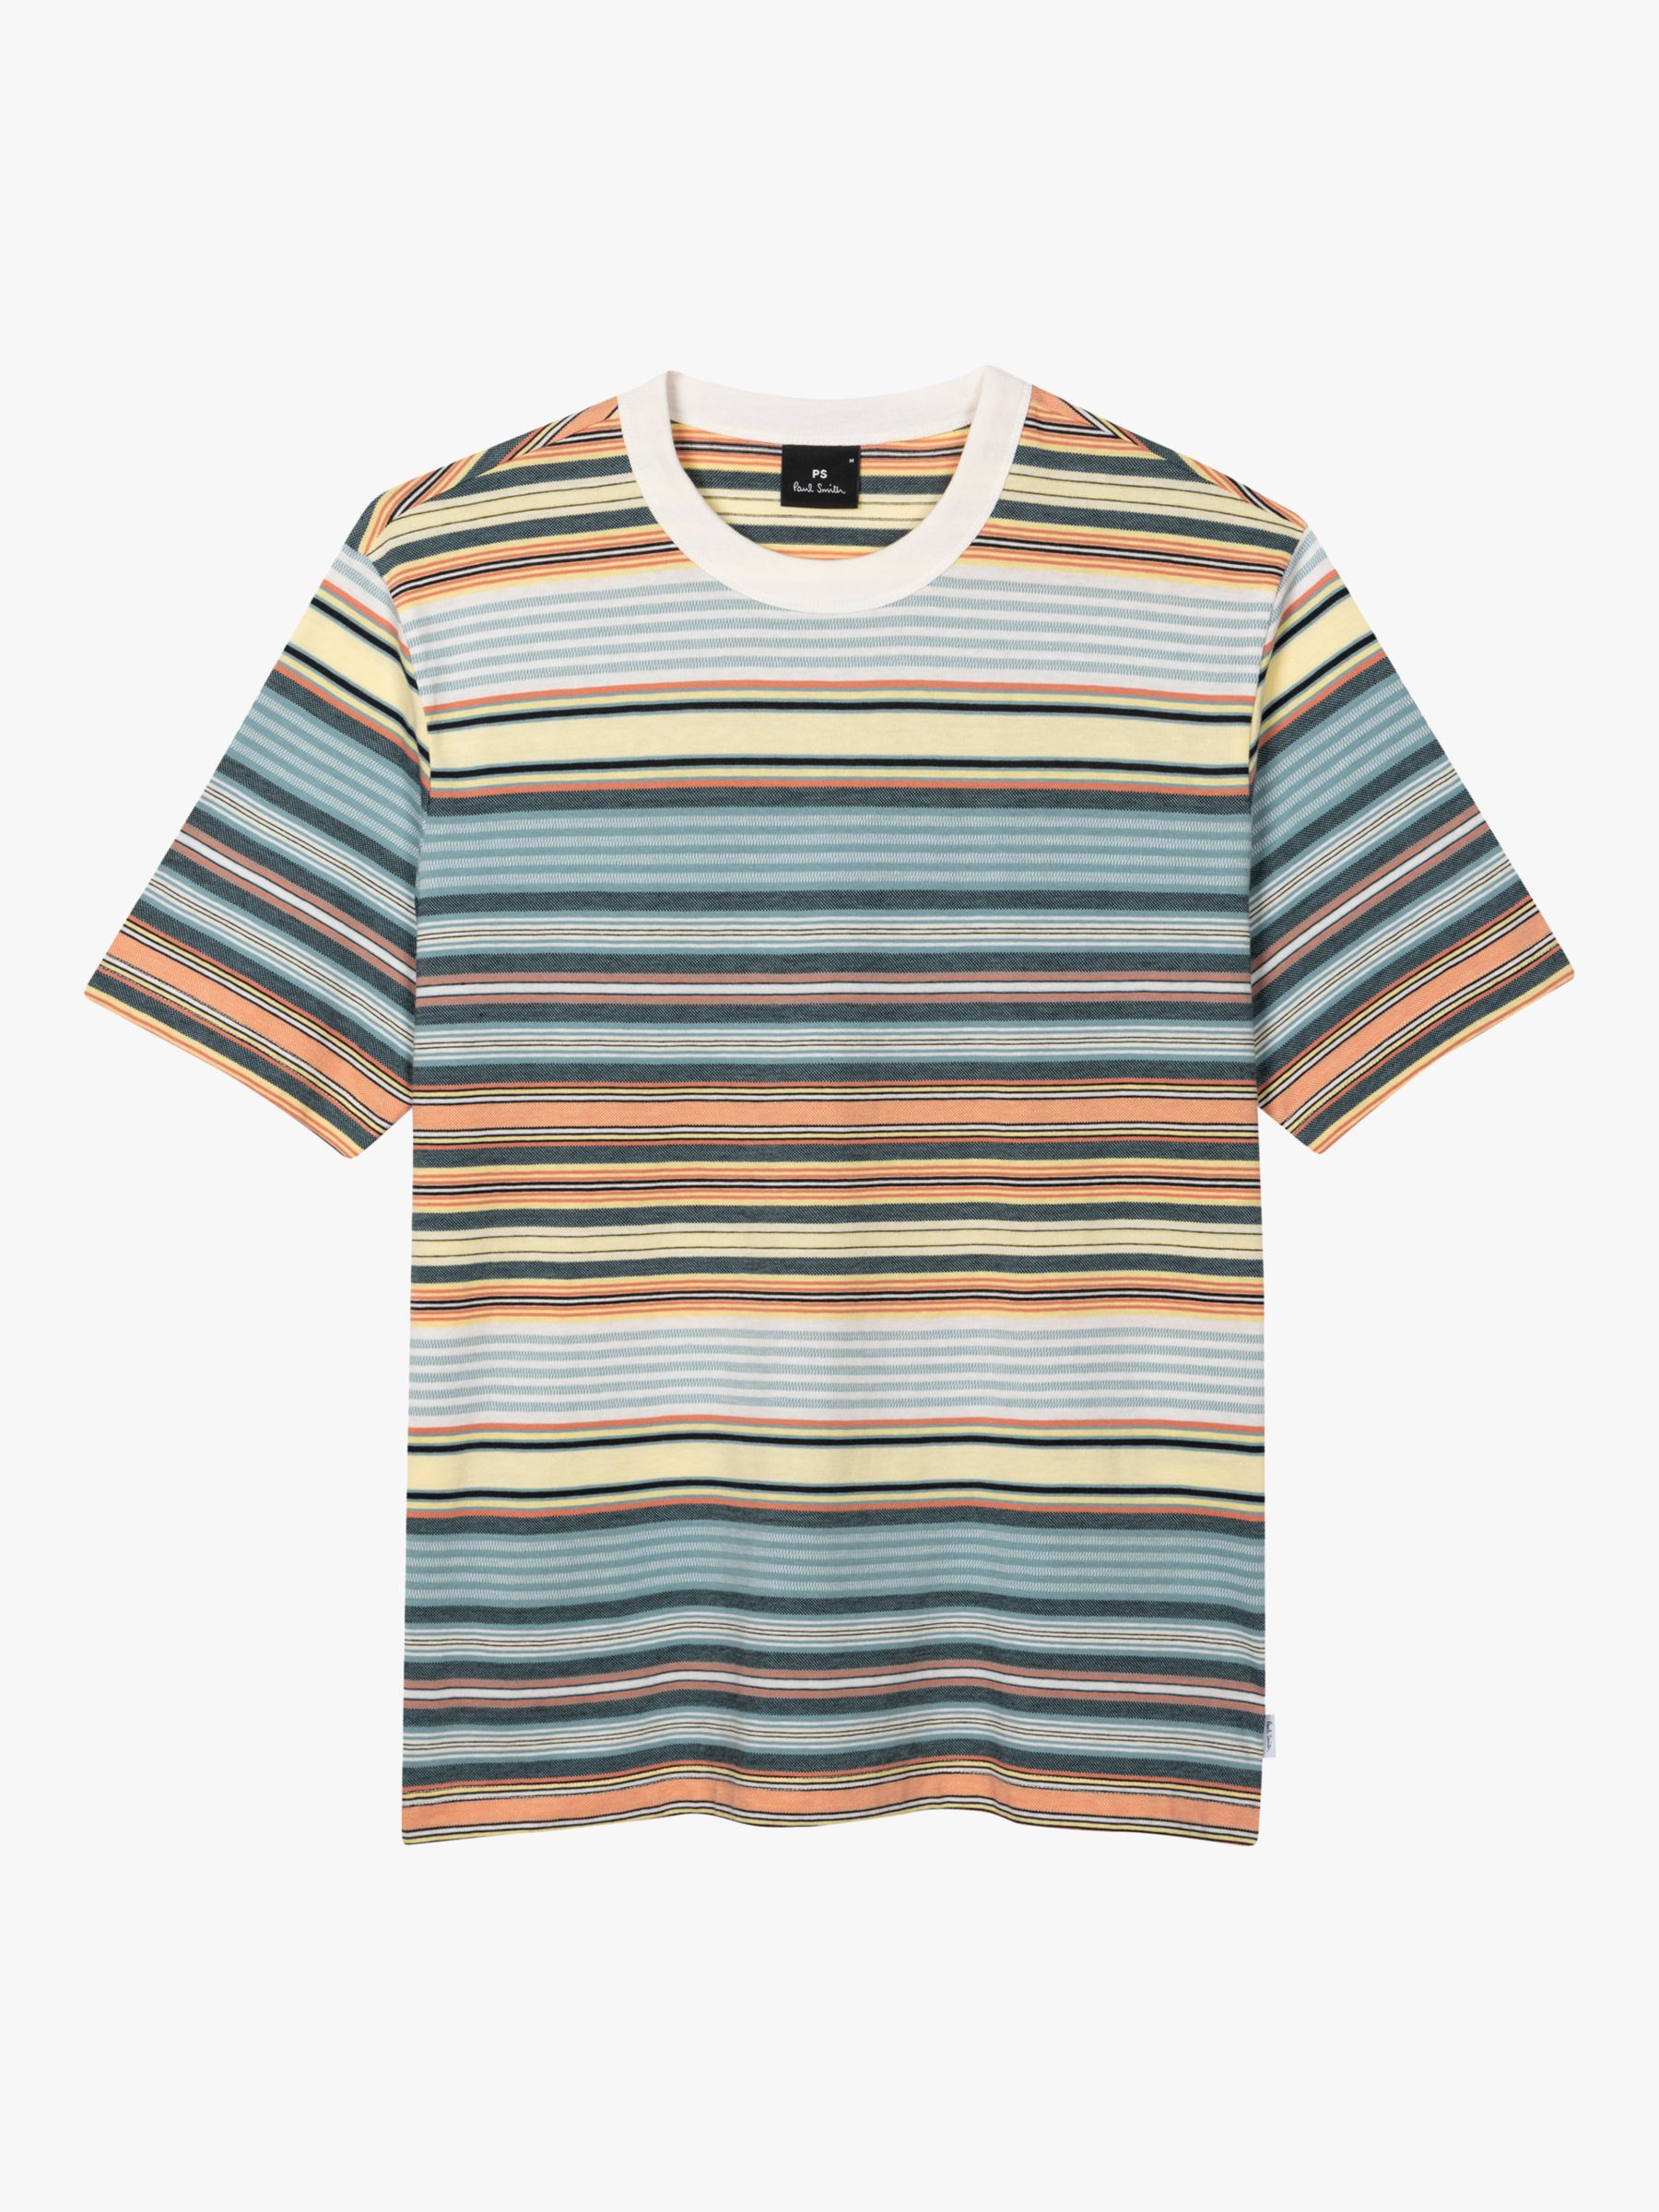 Paul Smith Stripe Short Sleeve T-Shirt, Orange/Multi, XL